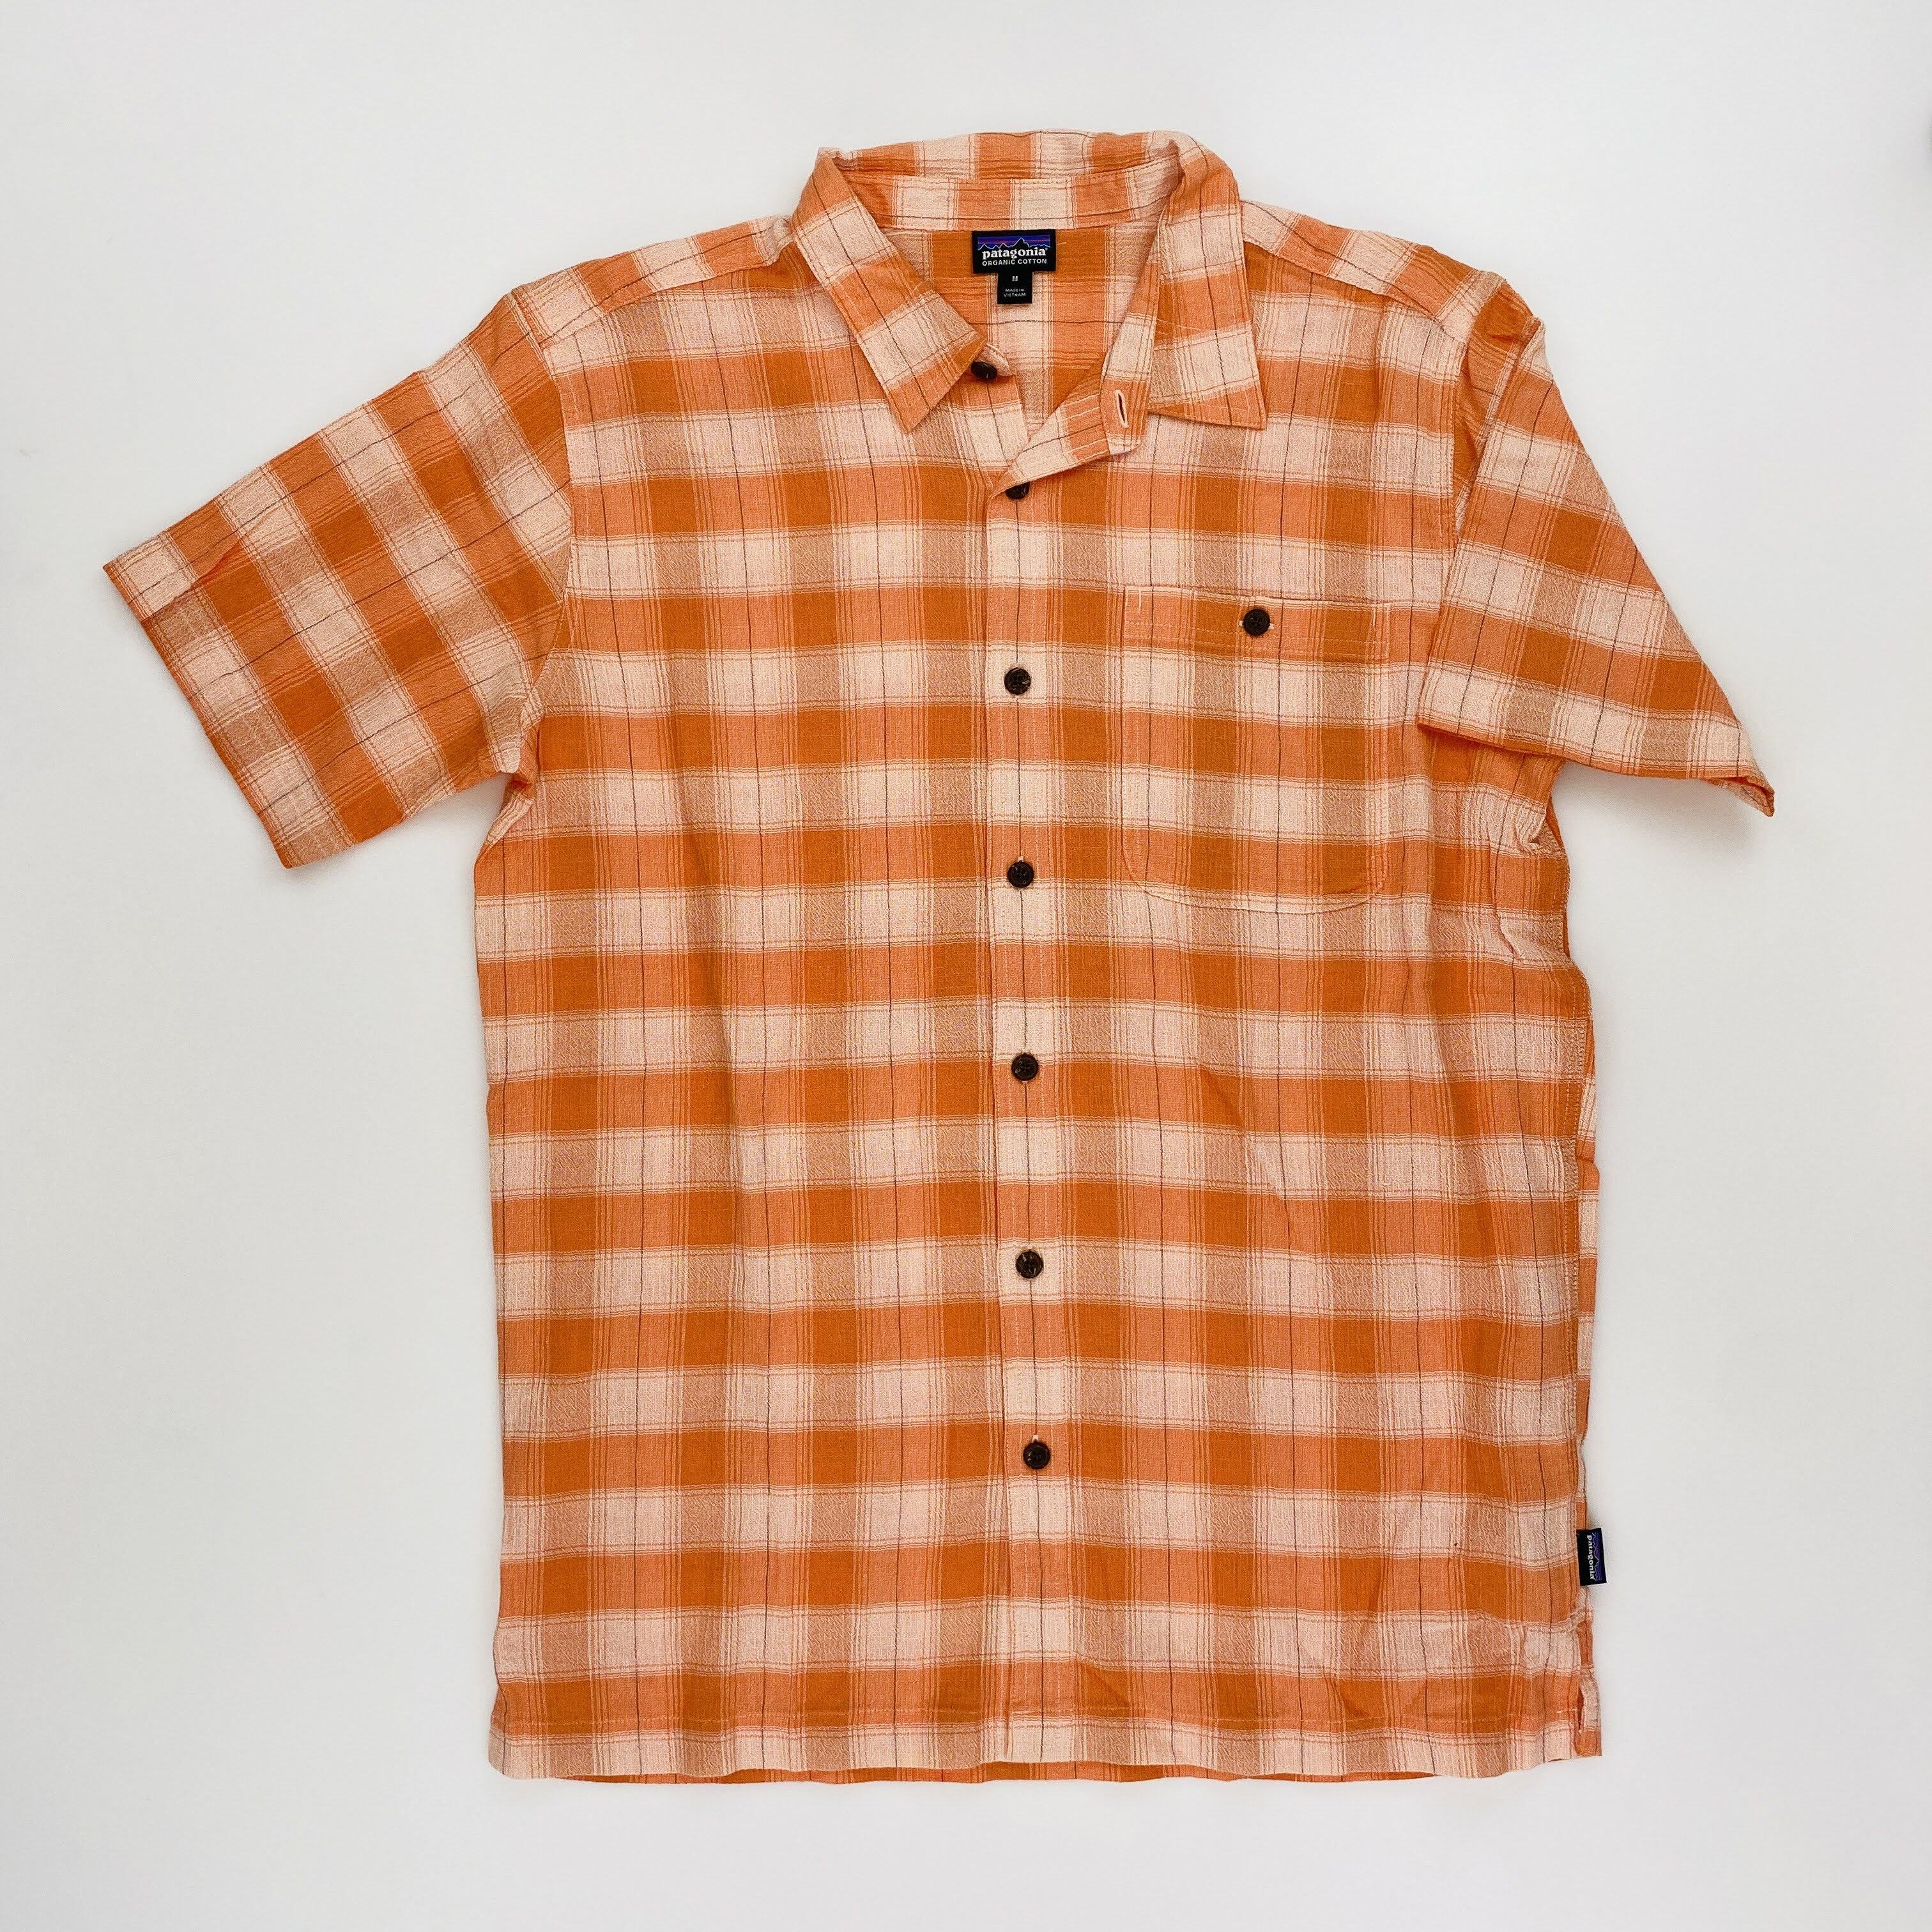 Patagonia M's A/C Shirt - Seconde main Chemise homme - Orange - M | Hardloop